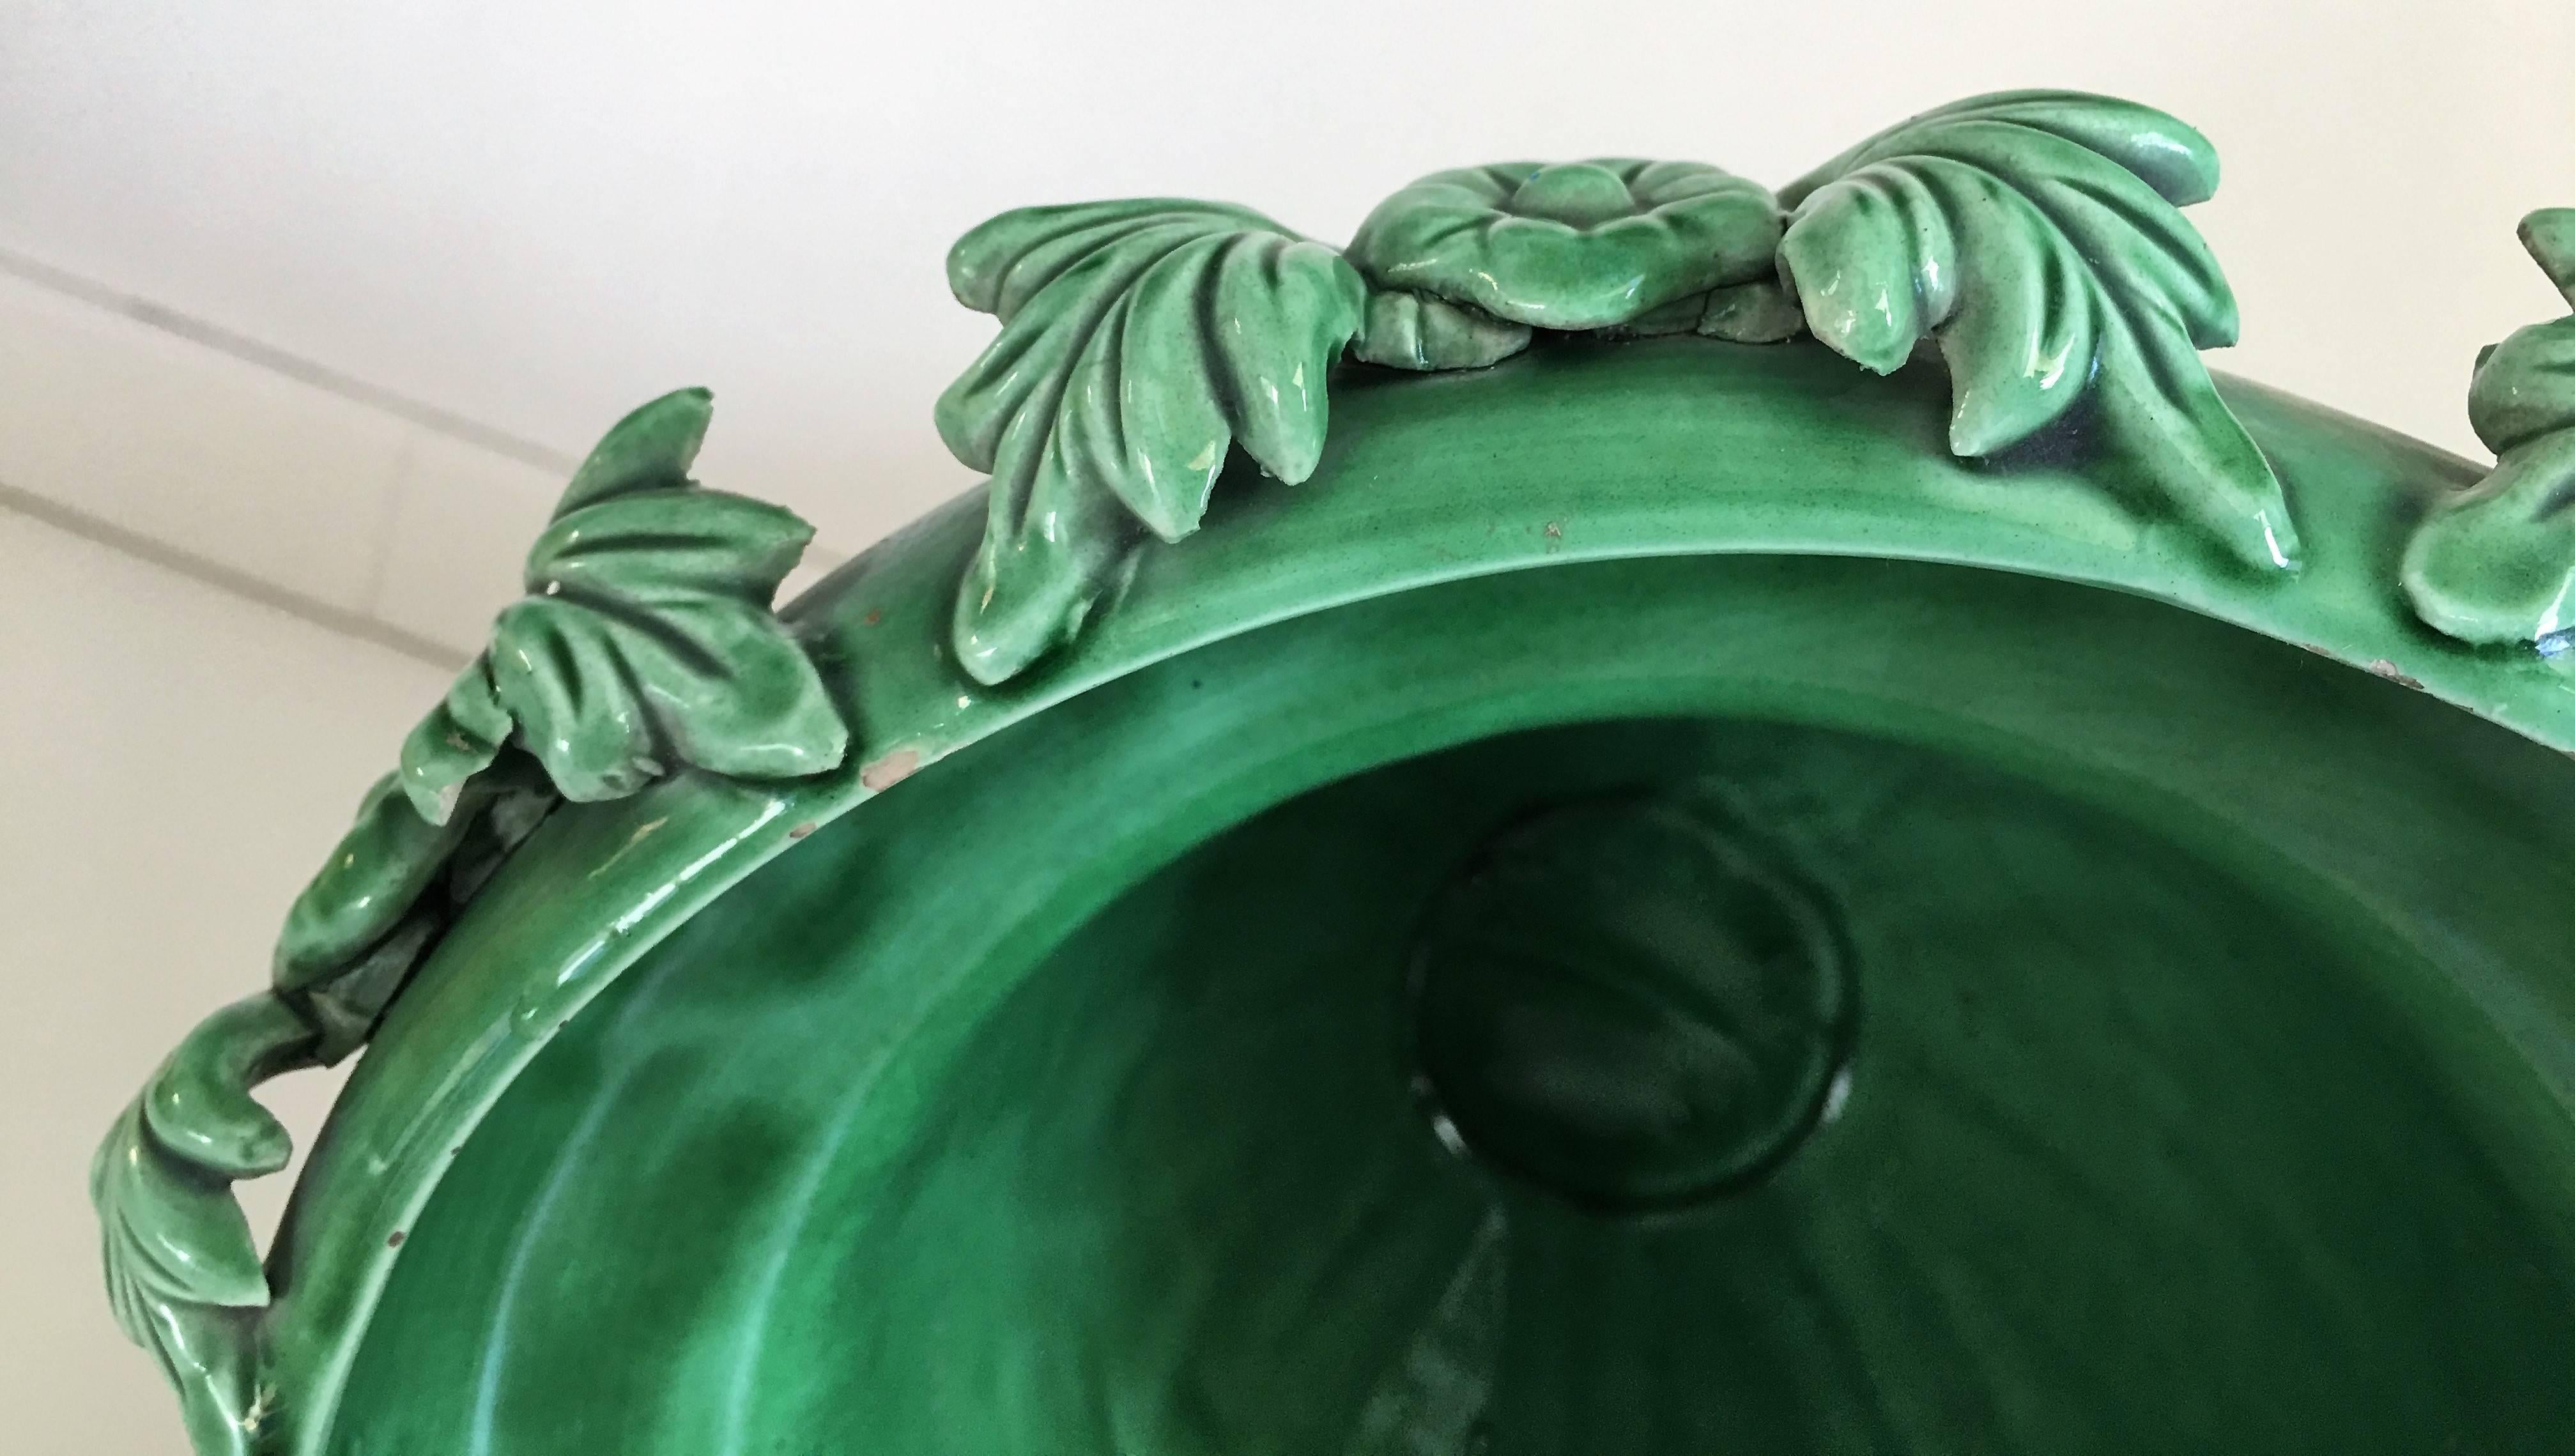 20th Century French Art Nouveau Ceramic Planter or Vase circa 1910 For Sale